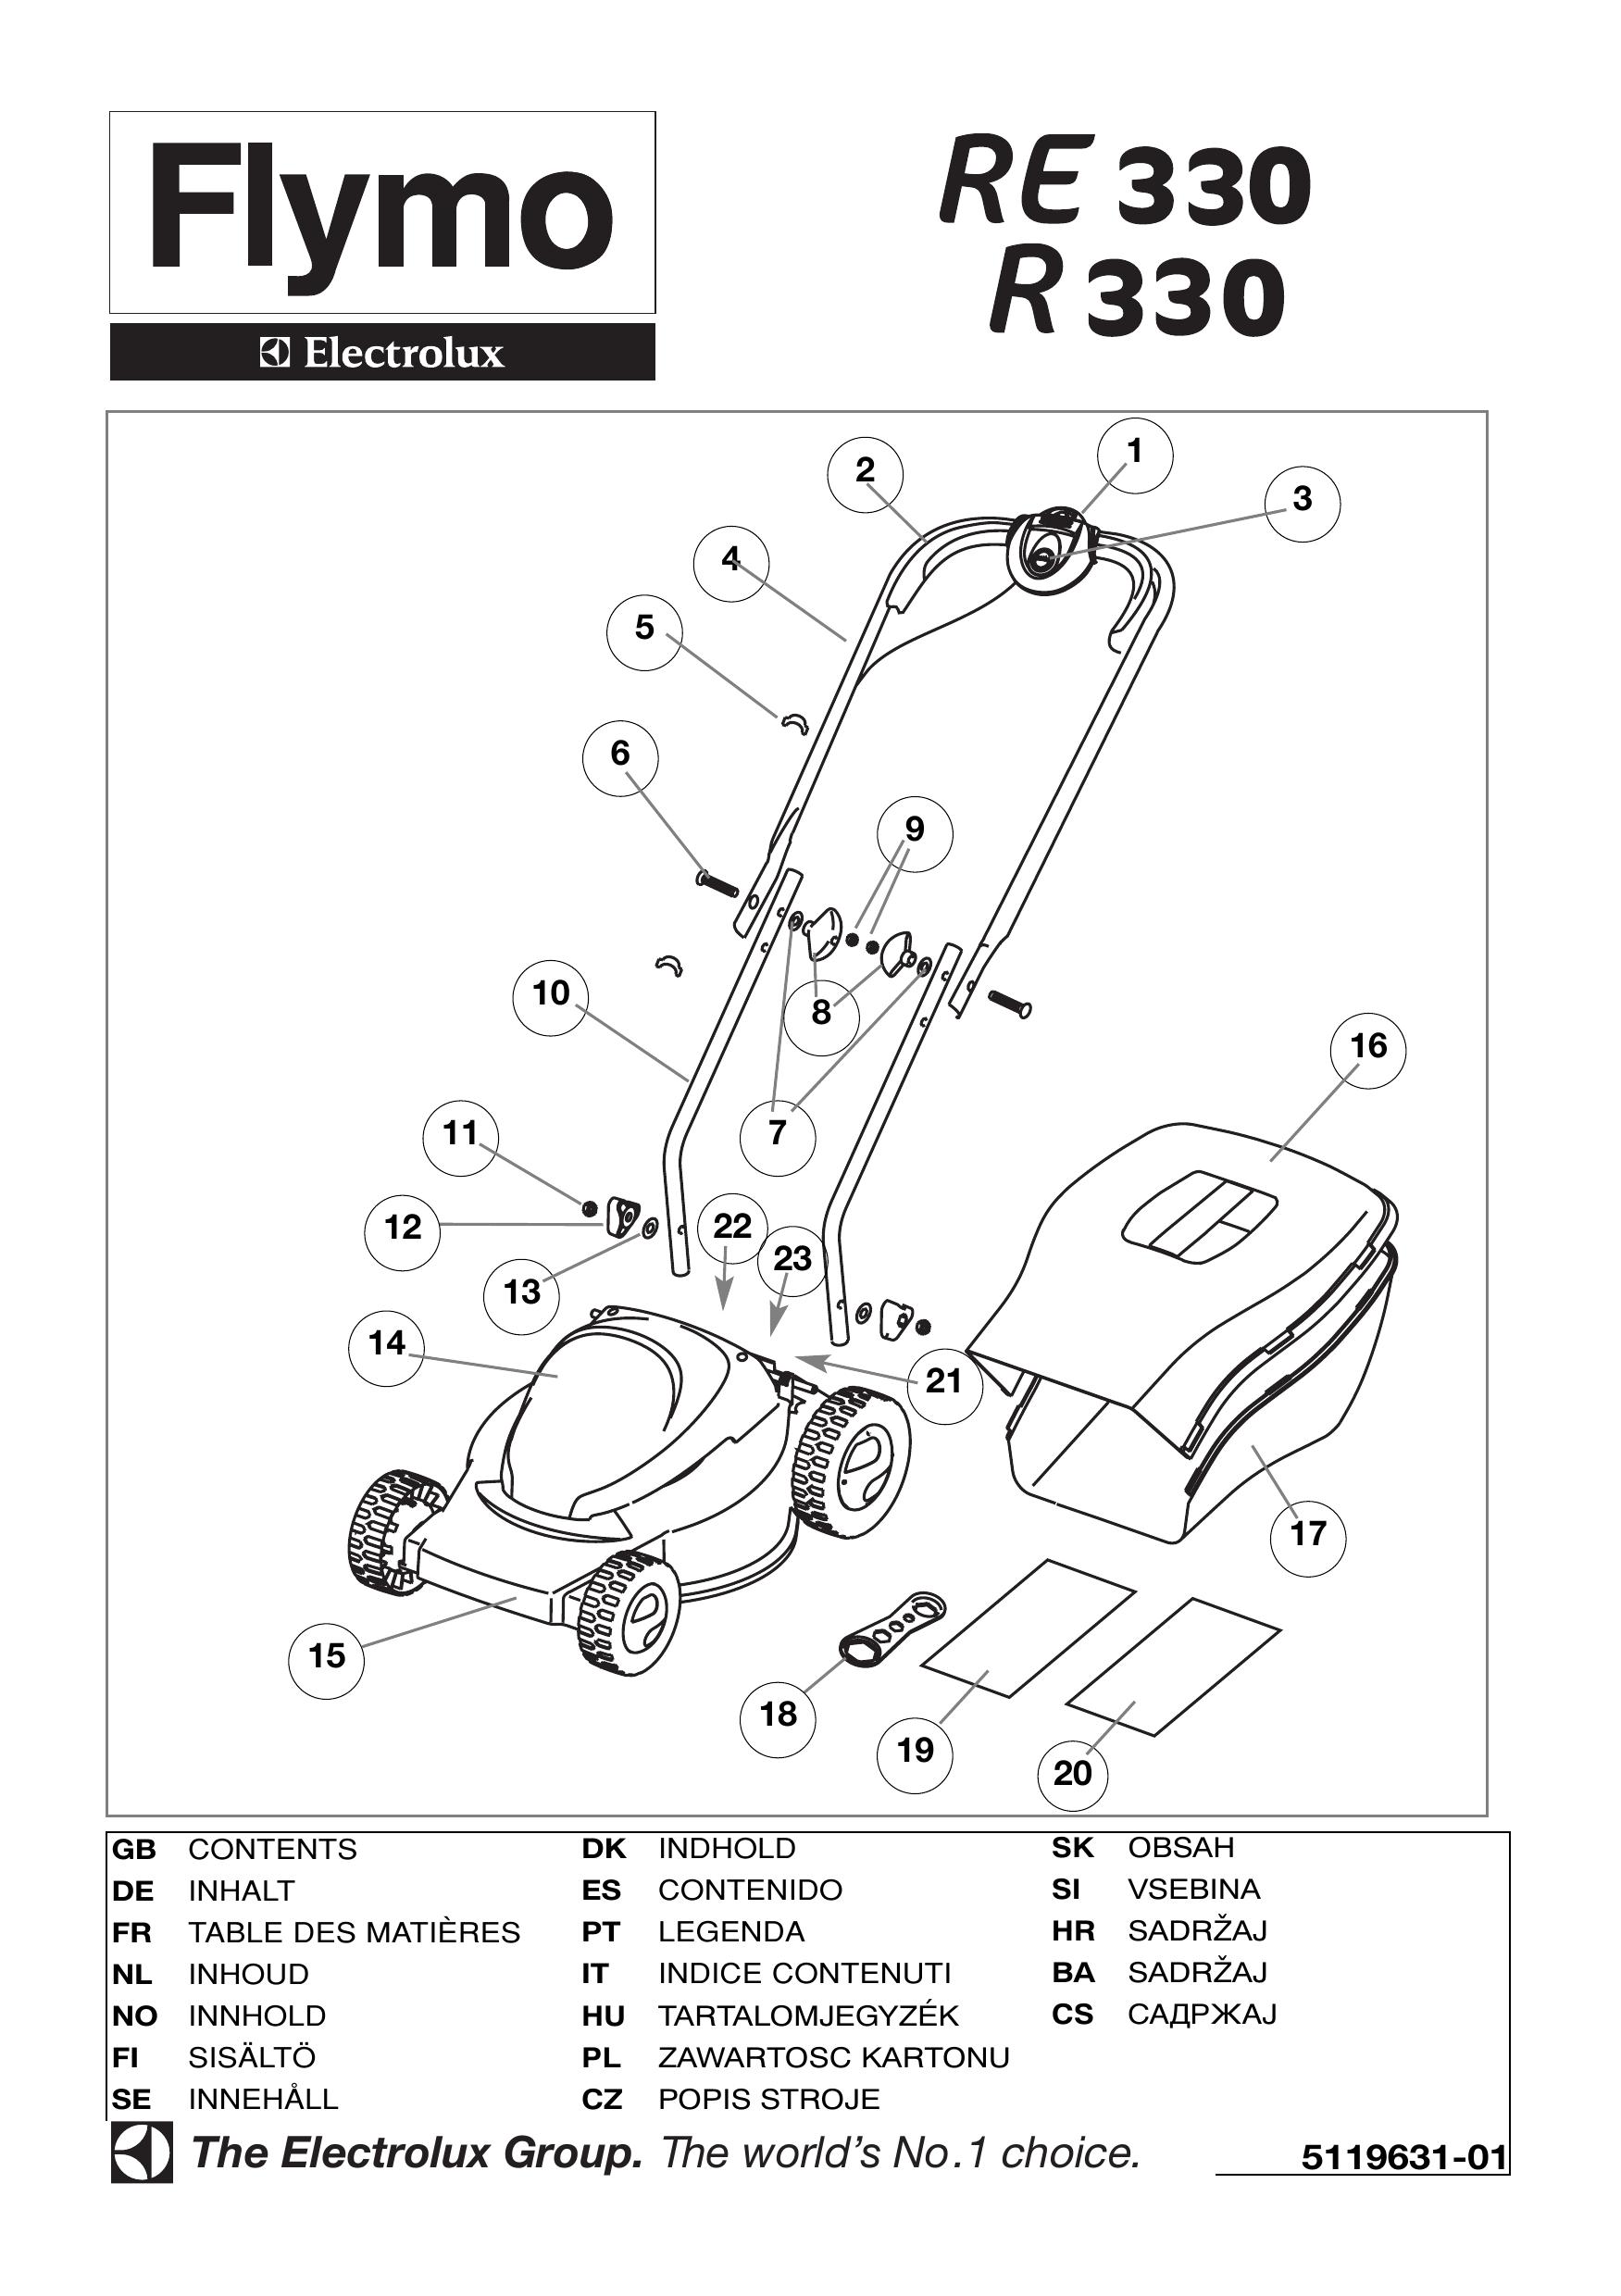 Flymo RE330 Lawn Mower User Manual